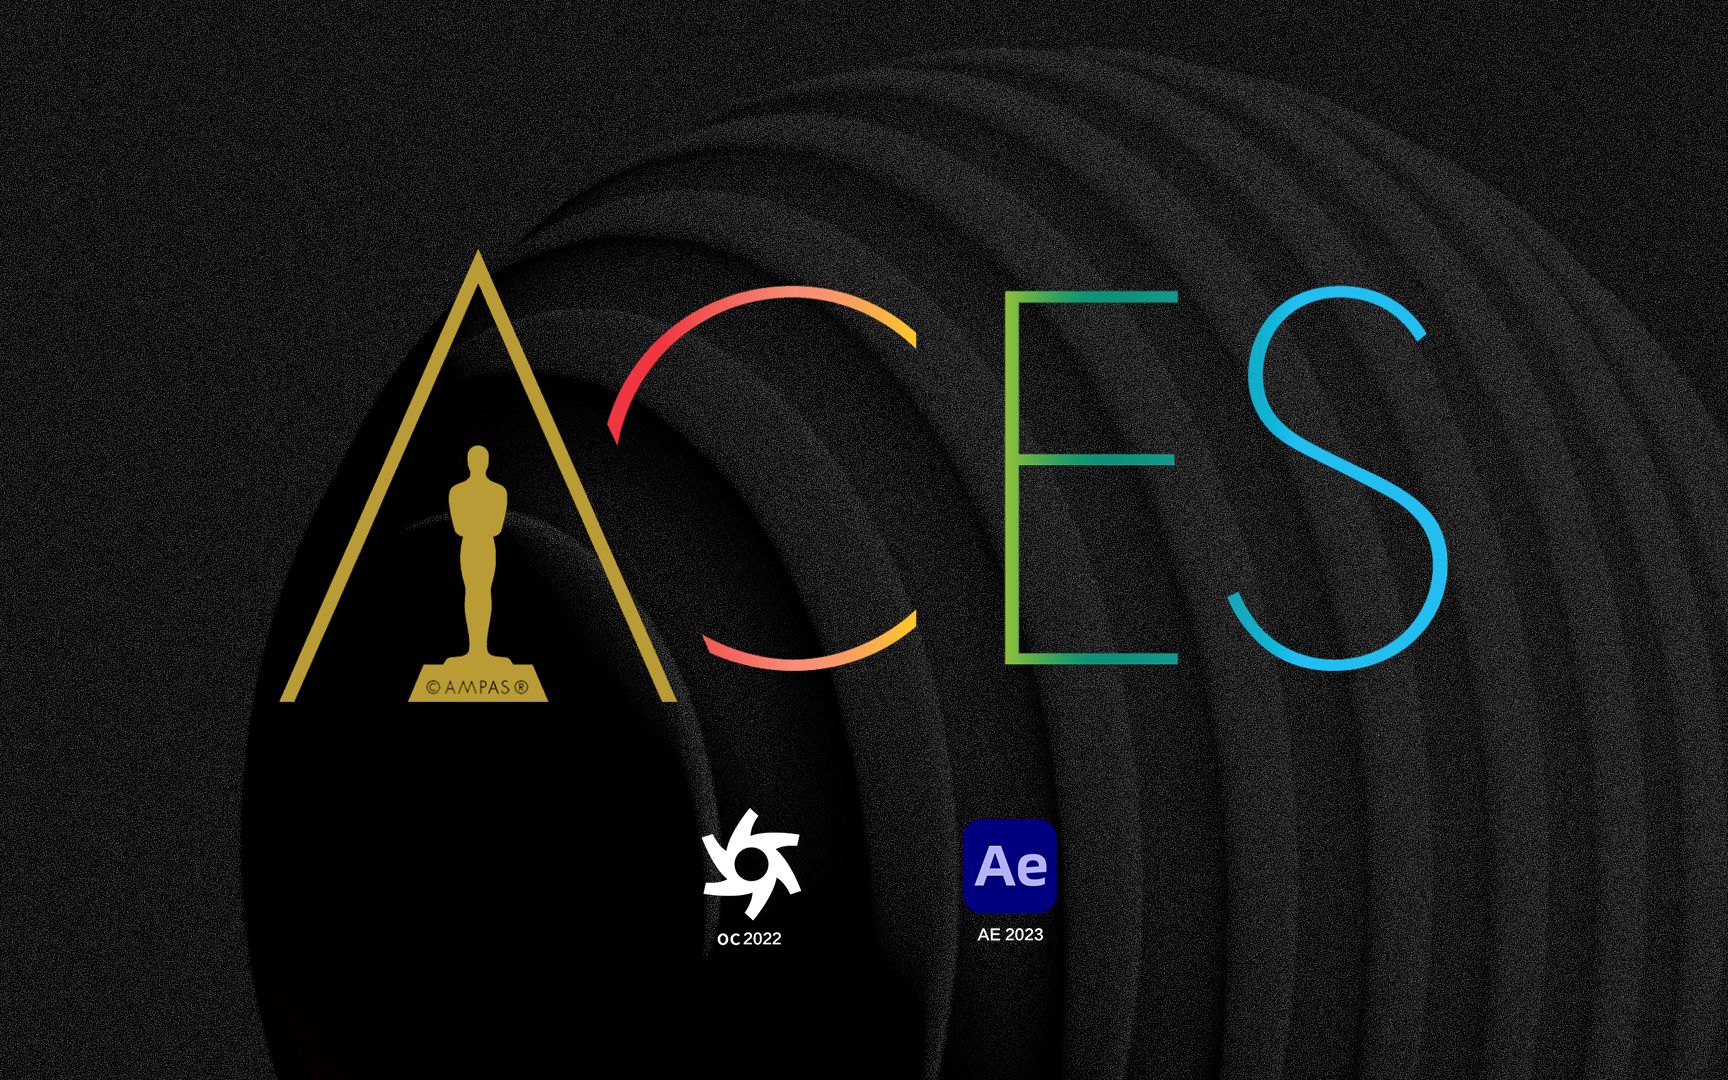 ACES最新流程丨从OC2022到AE2023 丨内置ACES丨解决色彩偏差